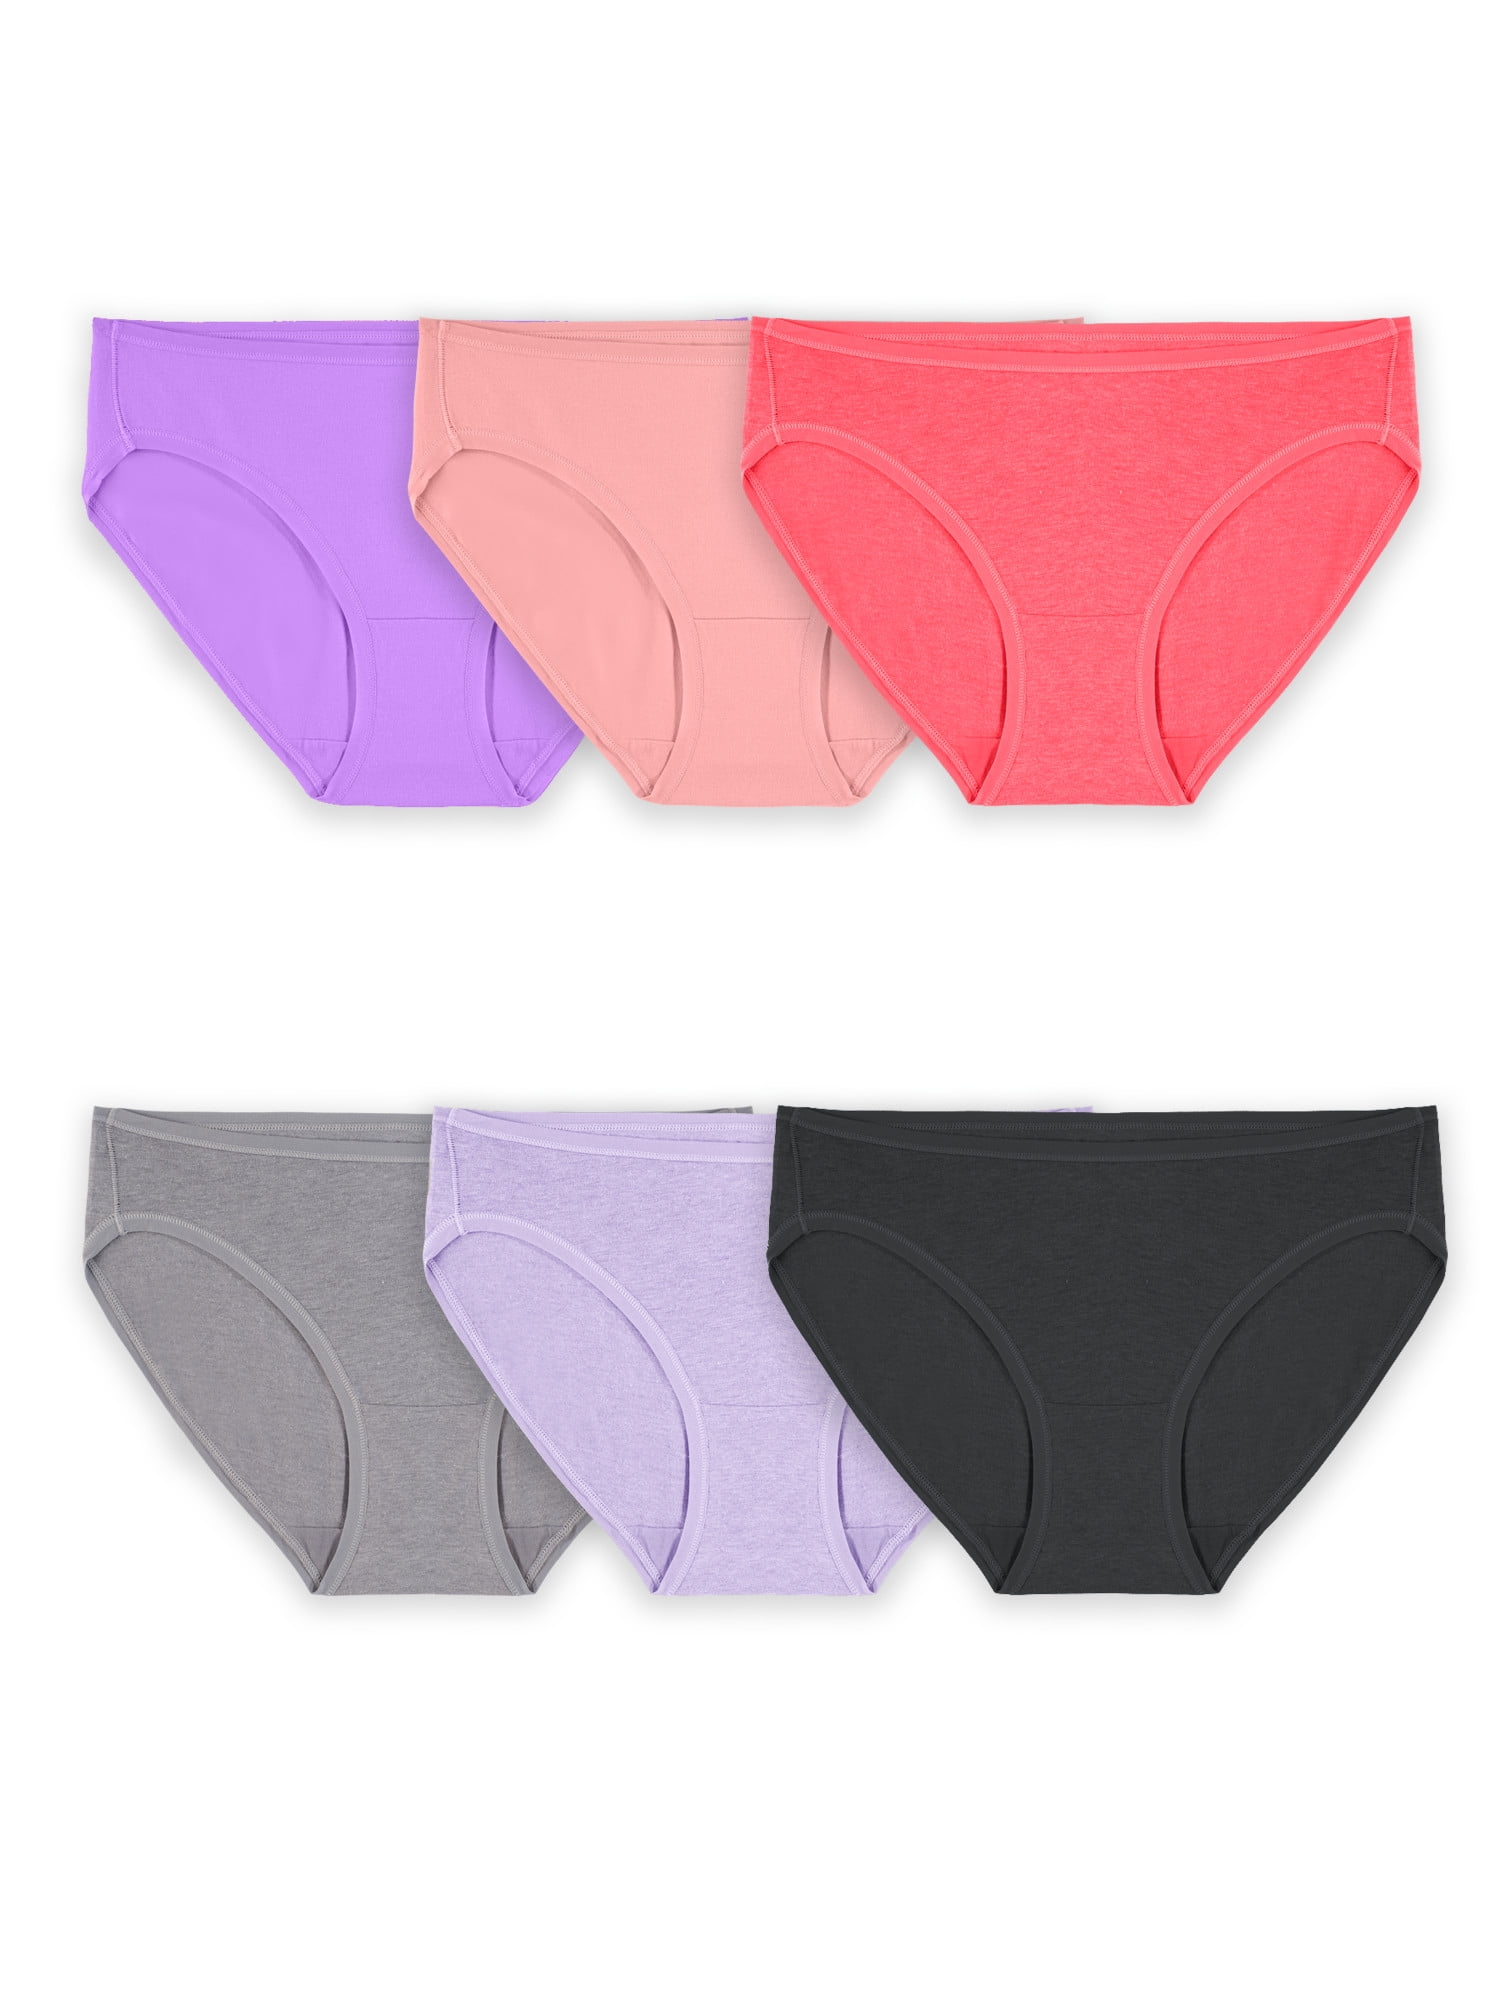 Fruit of the Loom Women's 360 Stretch Comfort Bikini Underwear, 6 Pack, Sizes S-2XL